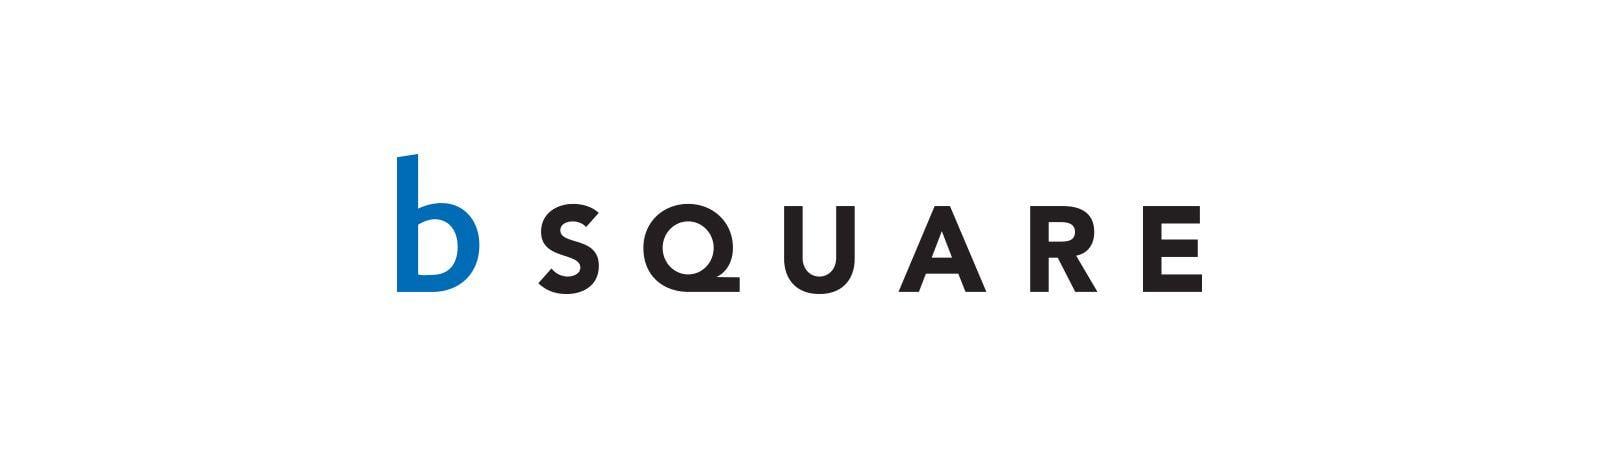 B- Square Logo - BSQUARE Corporation | Portfolios | TA